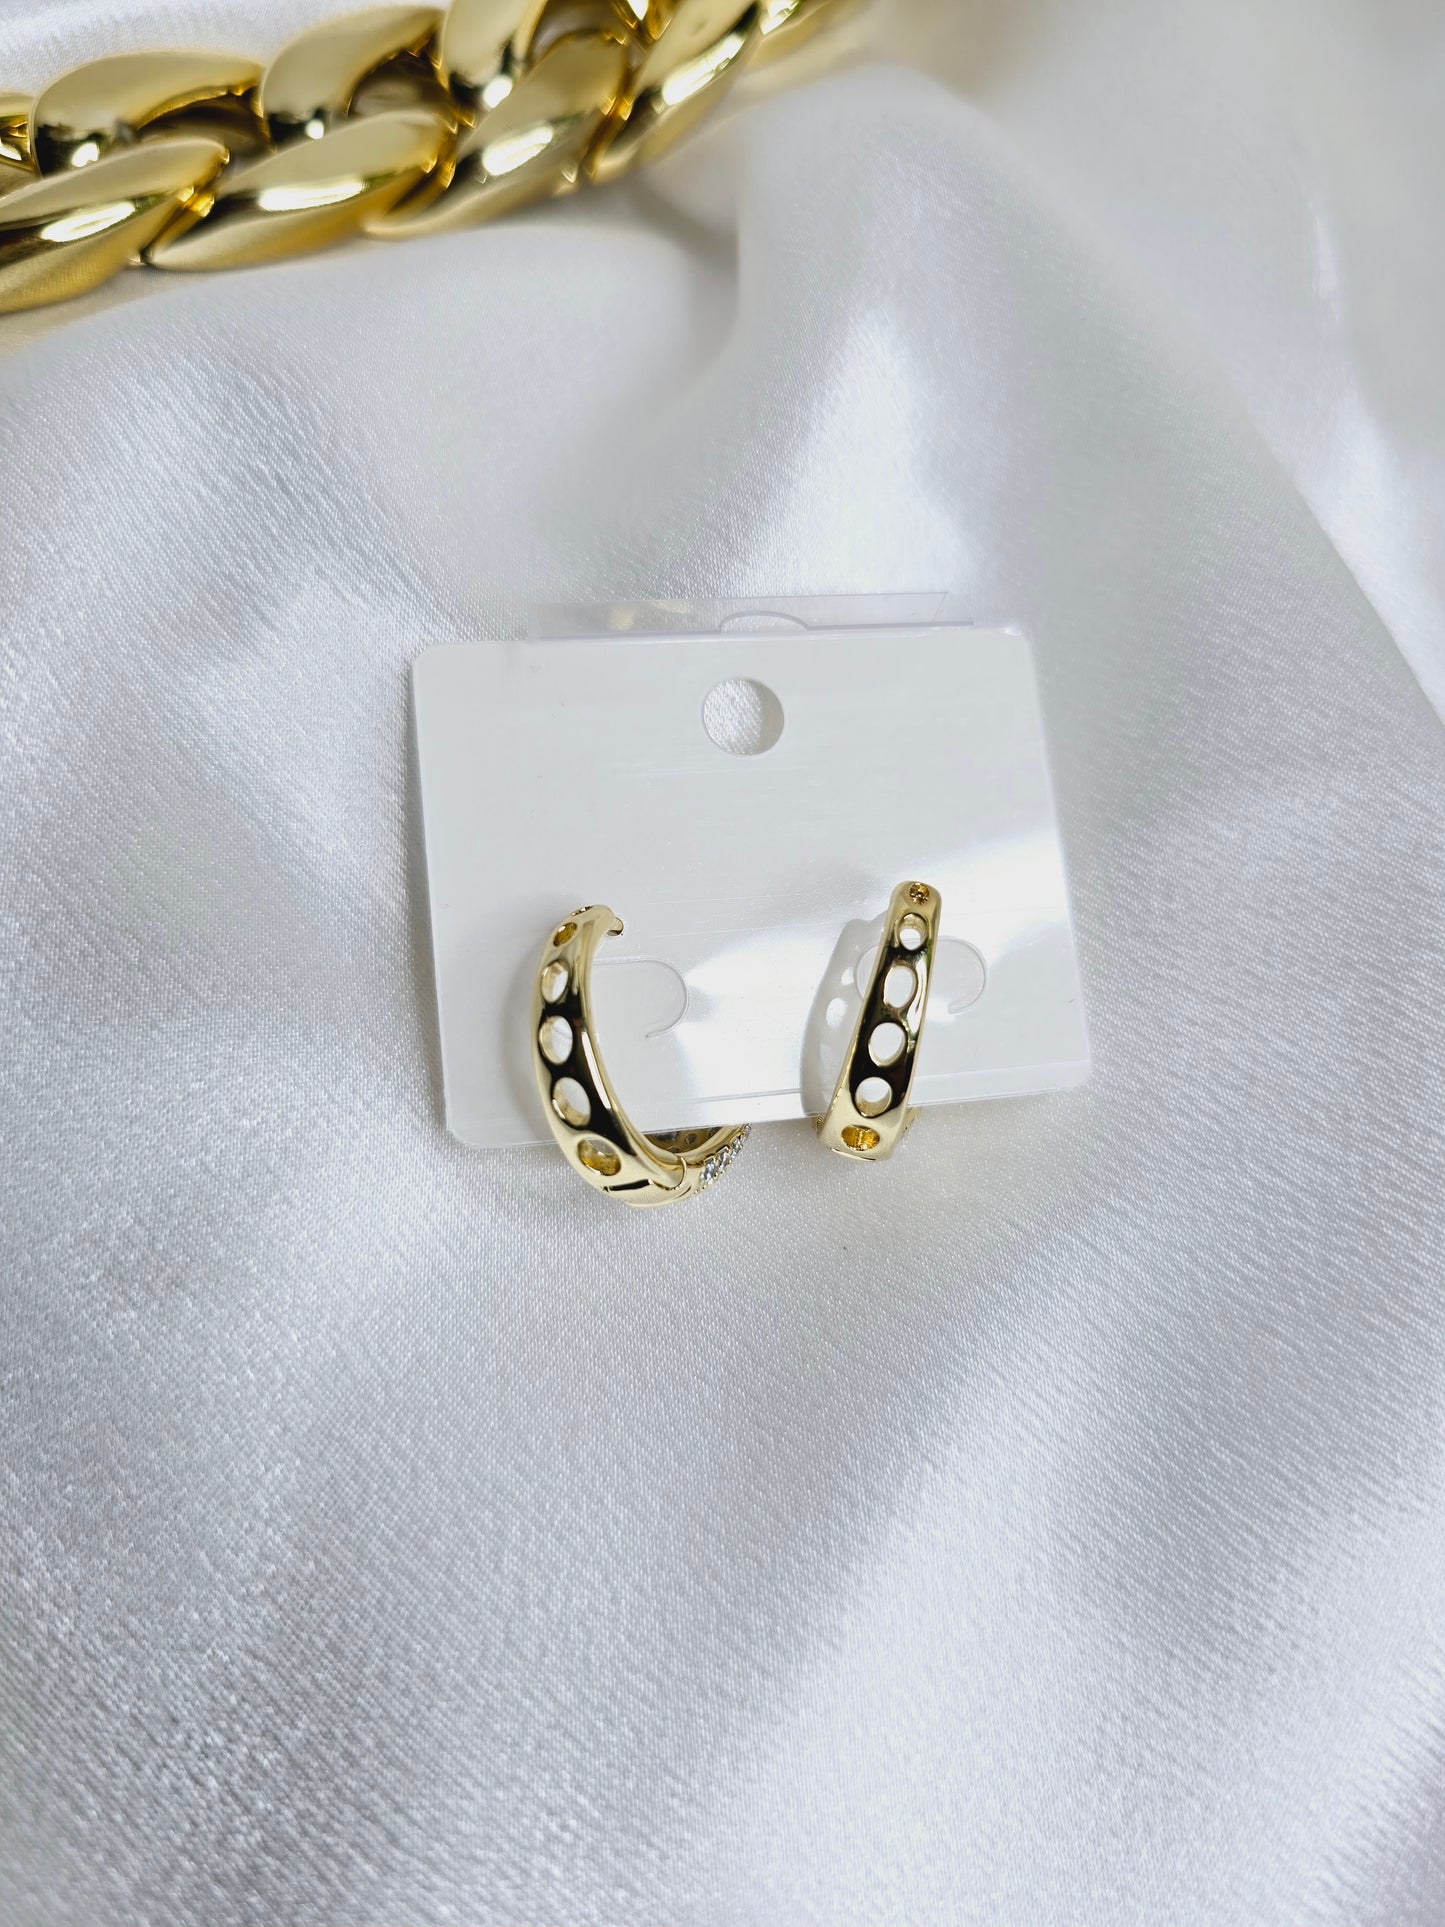 18k  gold filled  earrings medium size with rhinestone